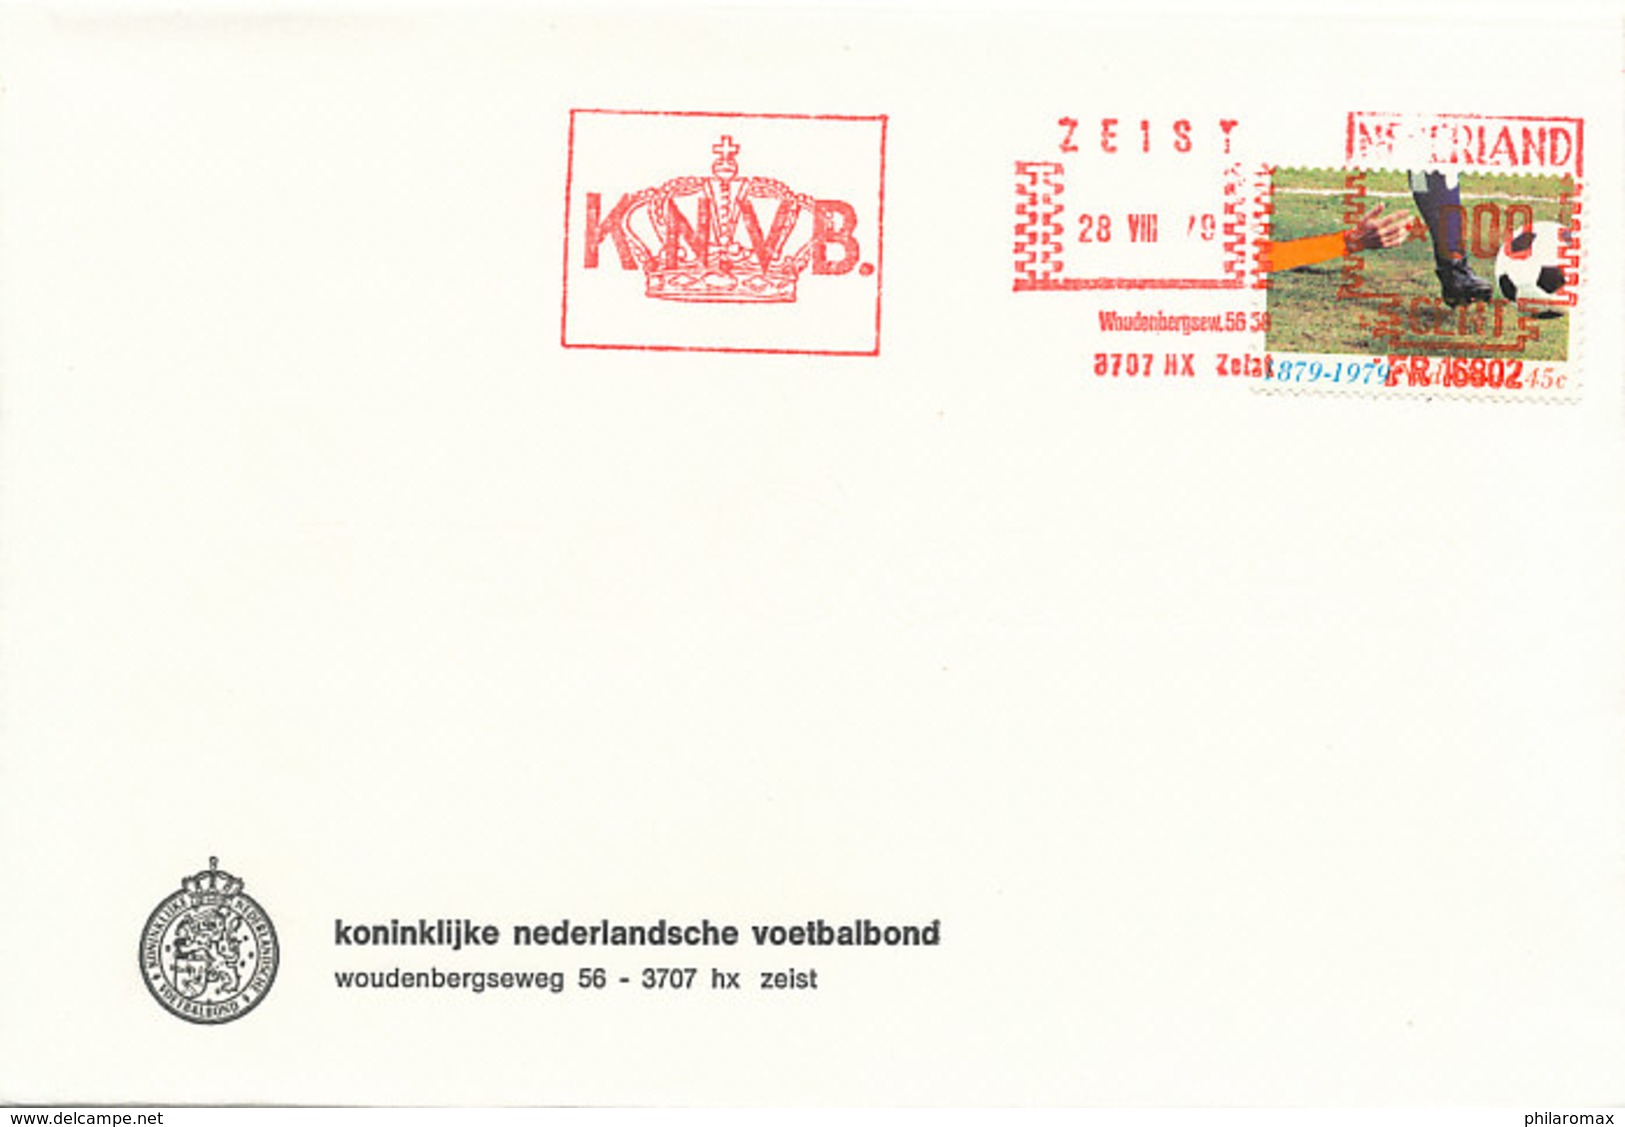 DC-1764 - 1979 NETHERLANDS - FDC 100 YEARS JUBILEE DUTCH SOCCER ORGANIZATION KNVB ZEIST - RED METER - Club Mitici